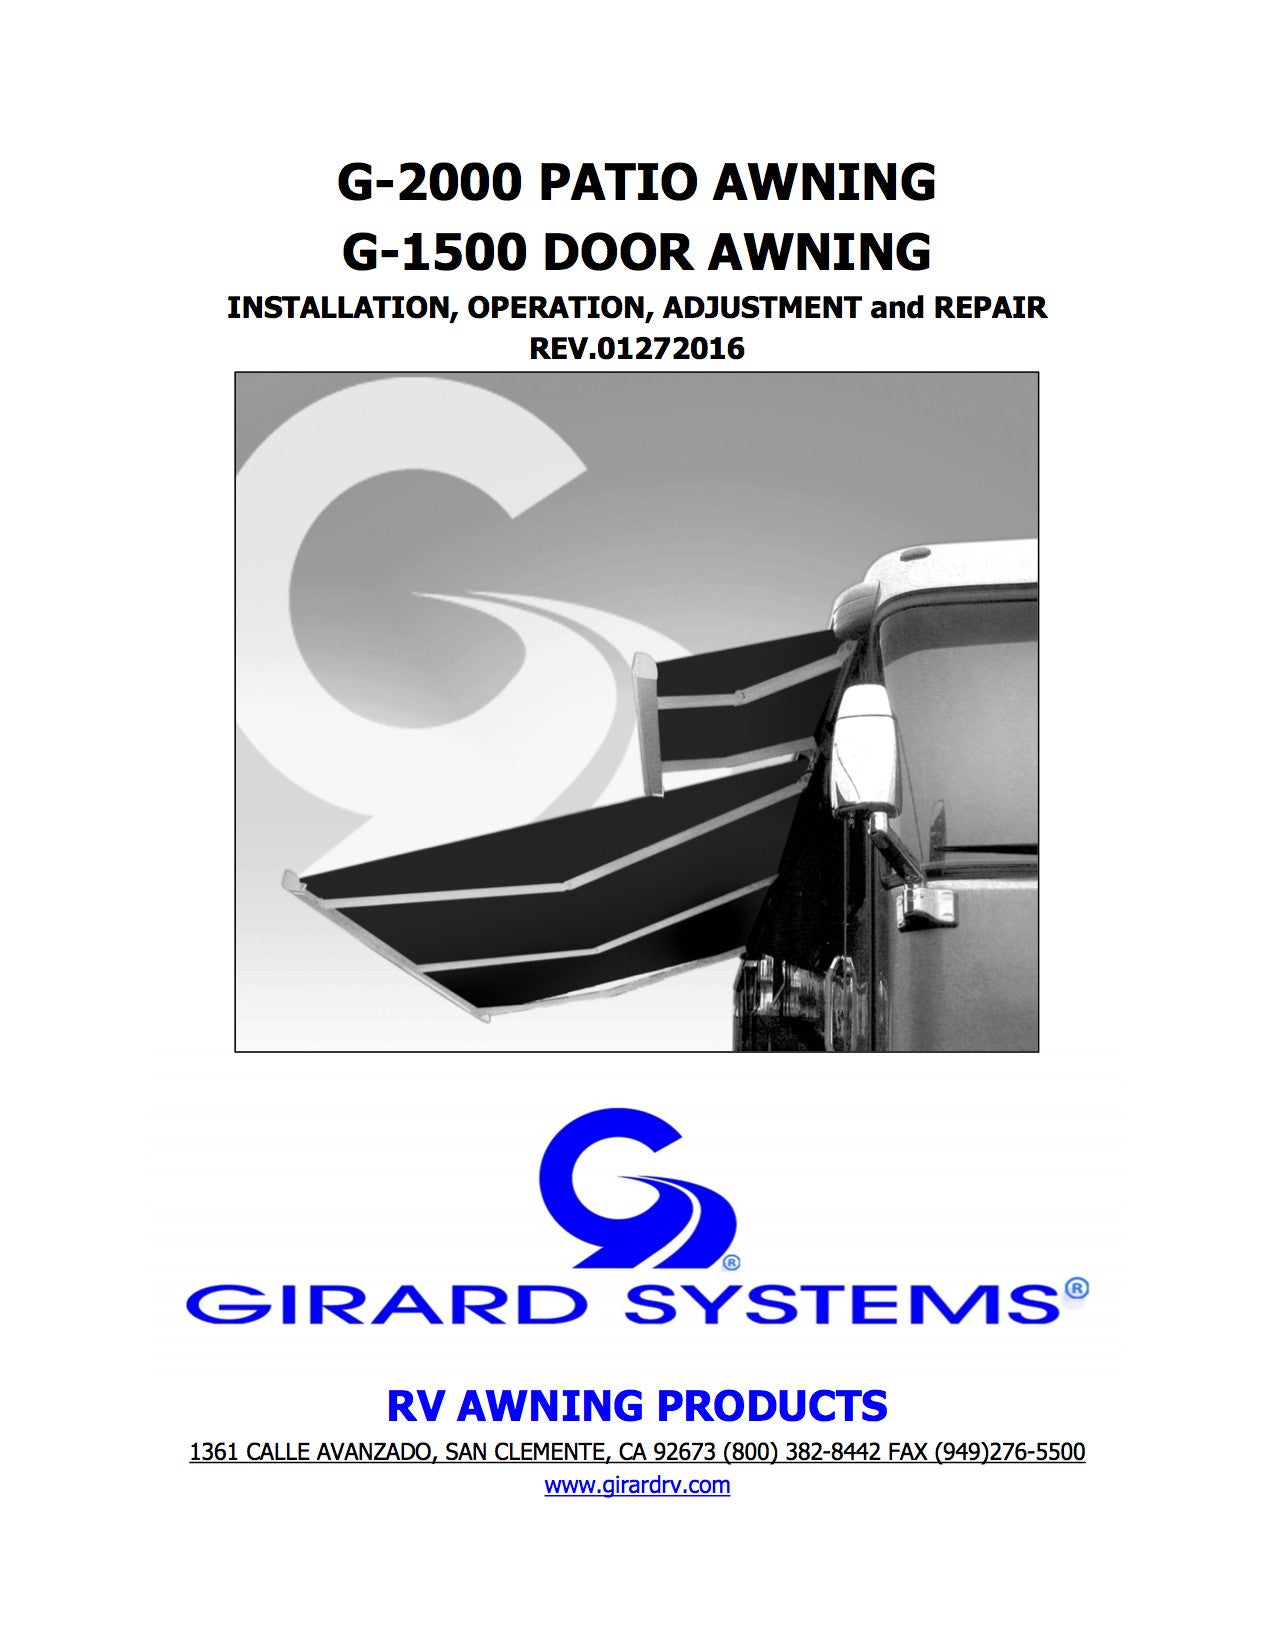 G 2000 Patio Awning G 1500 Door Awning Manual Girard RV Awnings